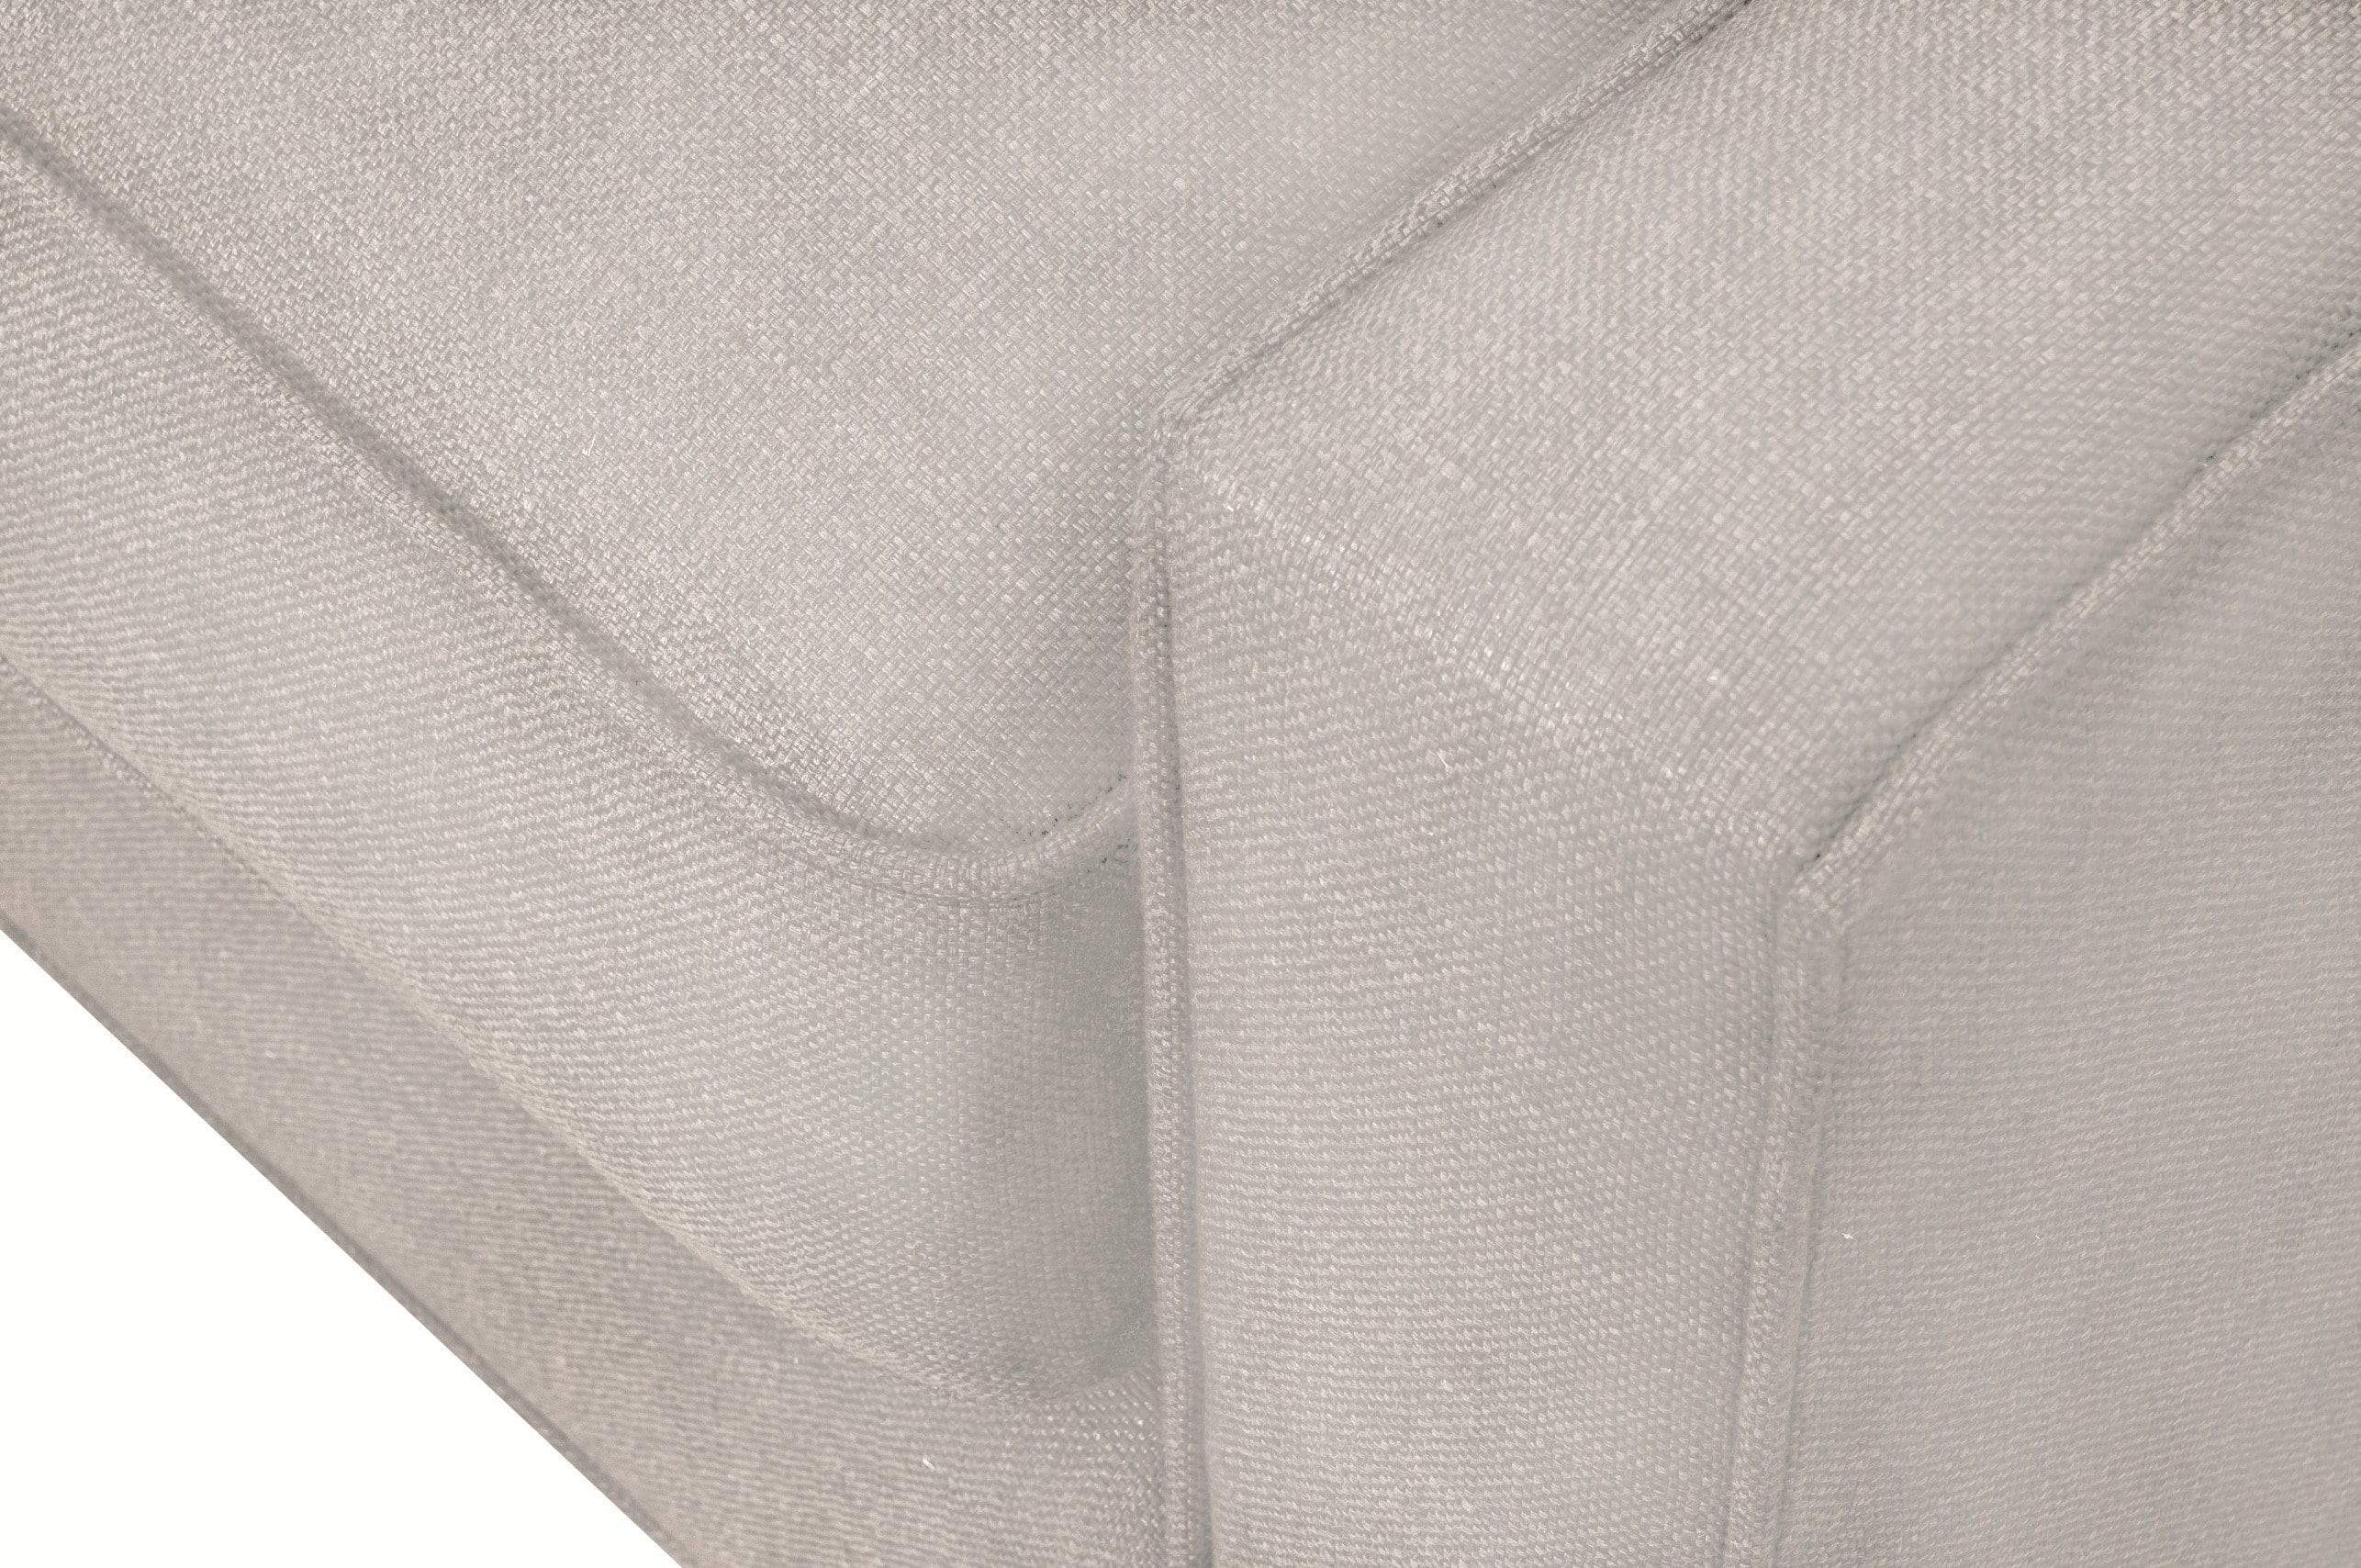 Fulla Left Facing Linen Tufted Sectional Sofa